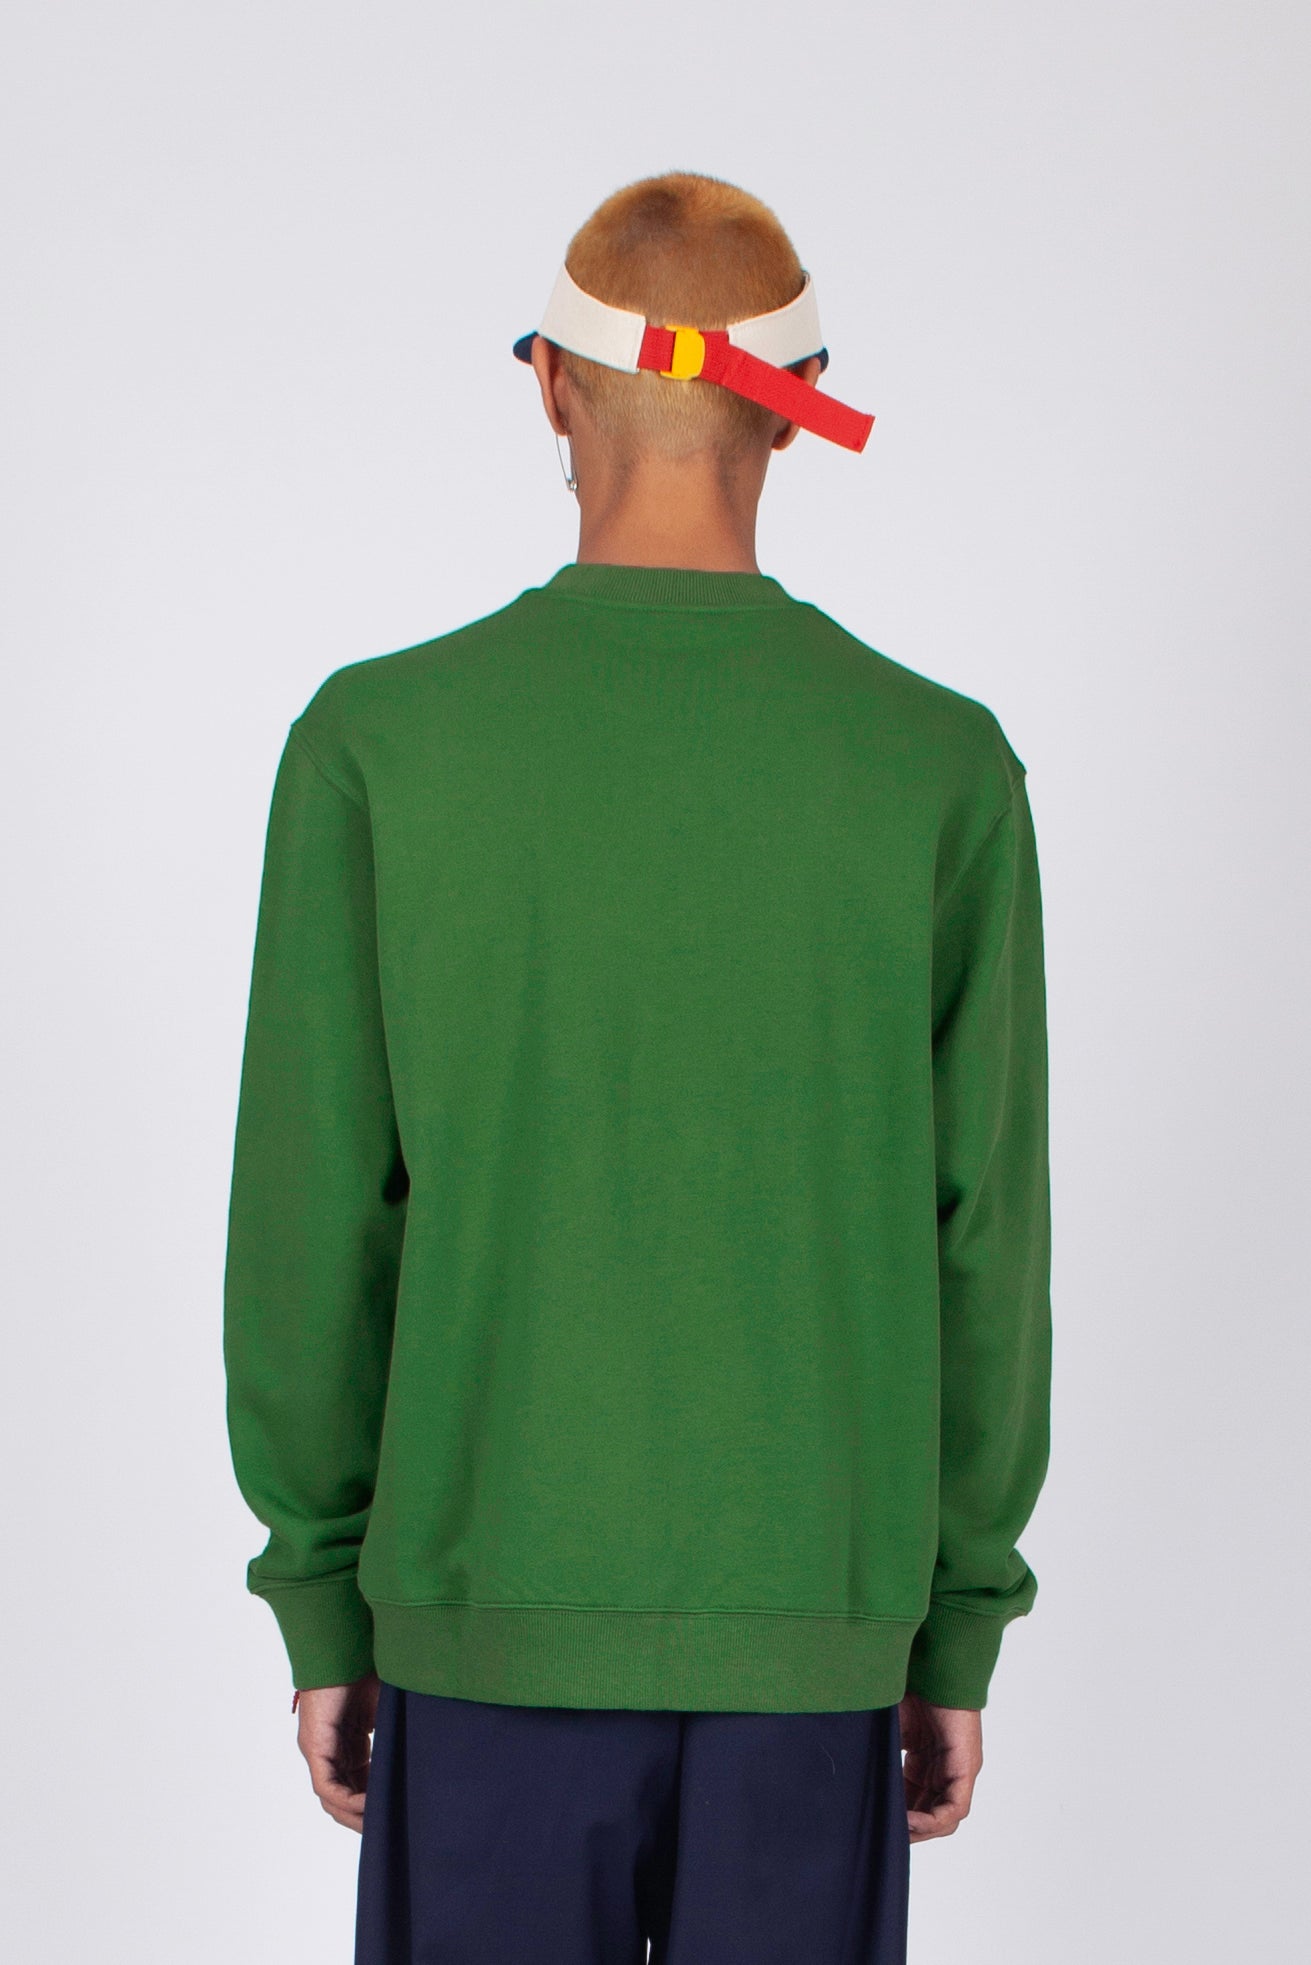 7am sweatshirt | green